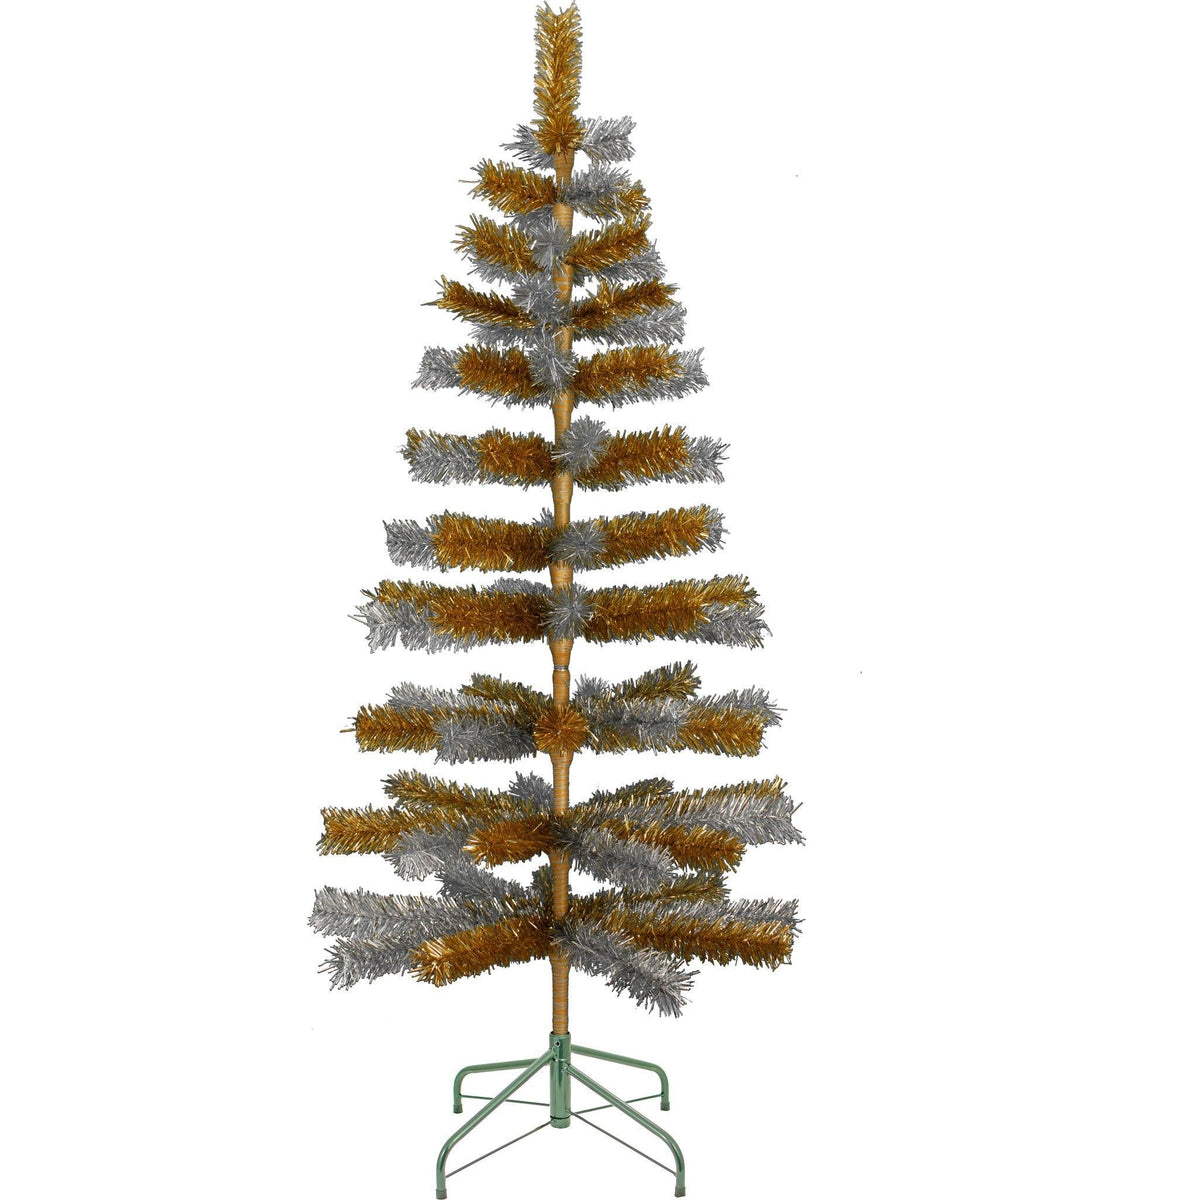 Orange & Silver Mixed Tinsel Christmas Tree - Lee Display